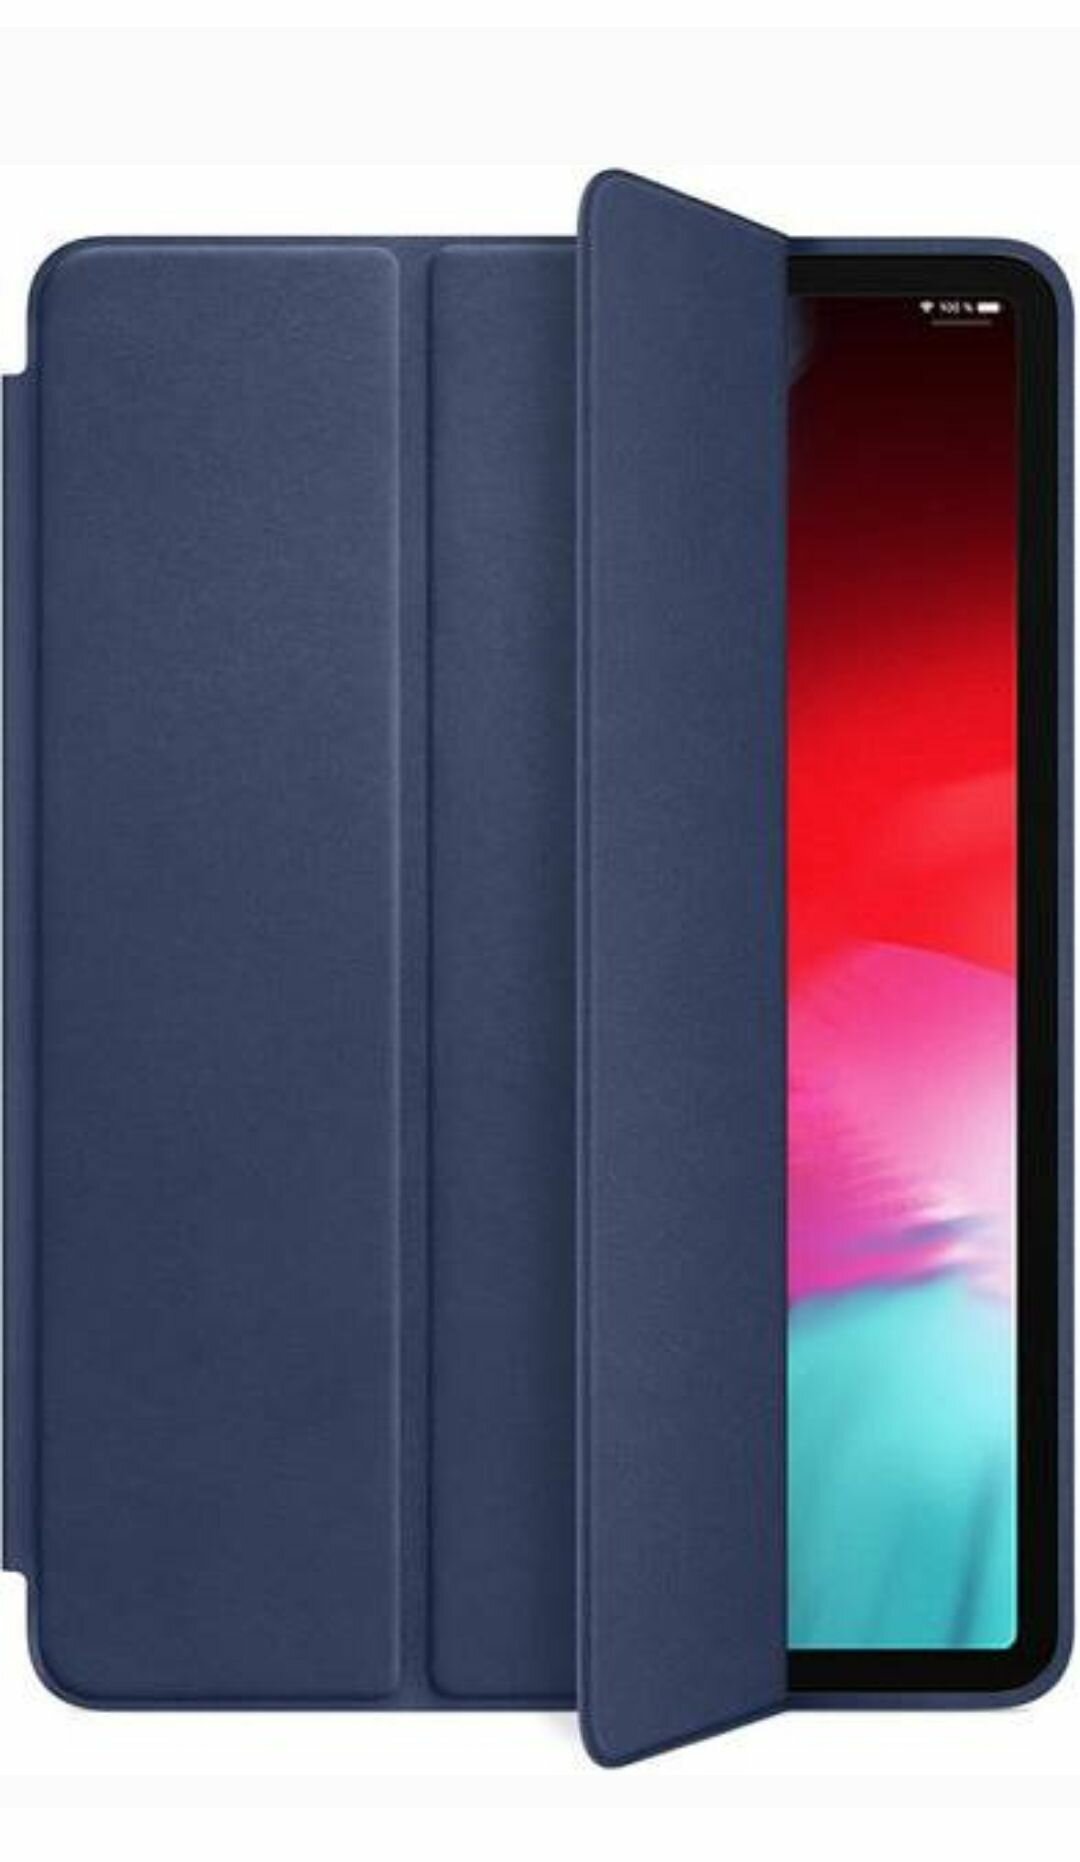 IPad Pro 11 2018 чехол книжка smart case для планшета эпл айпад про 11 темно-синий смарт кейс